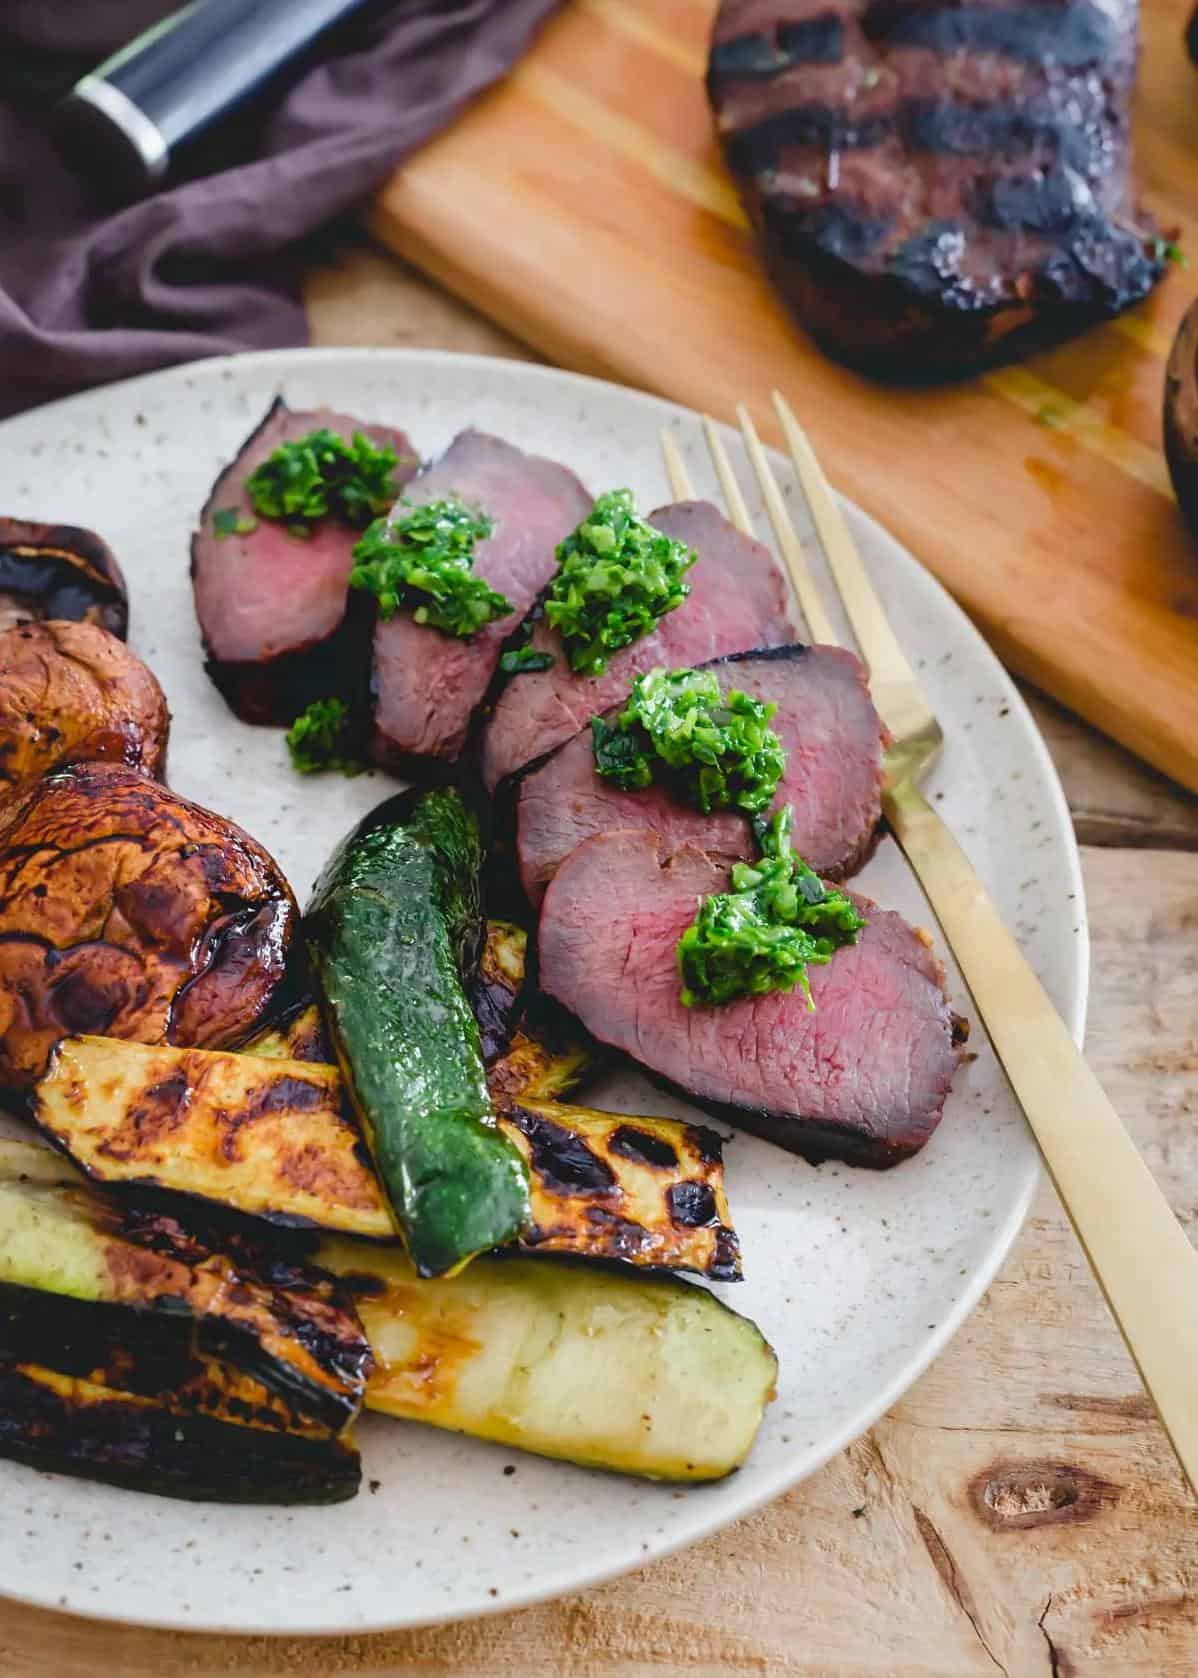  The ultimate backyard feast: grilled venison tenderloin.